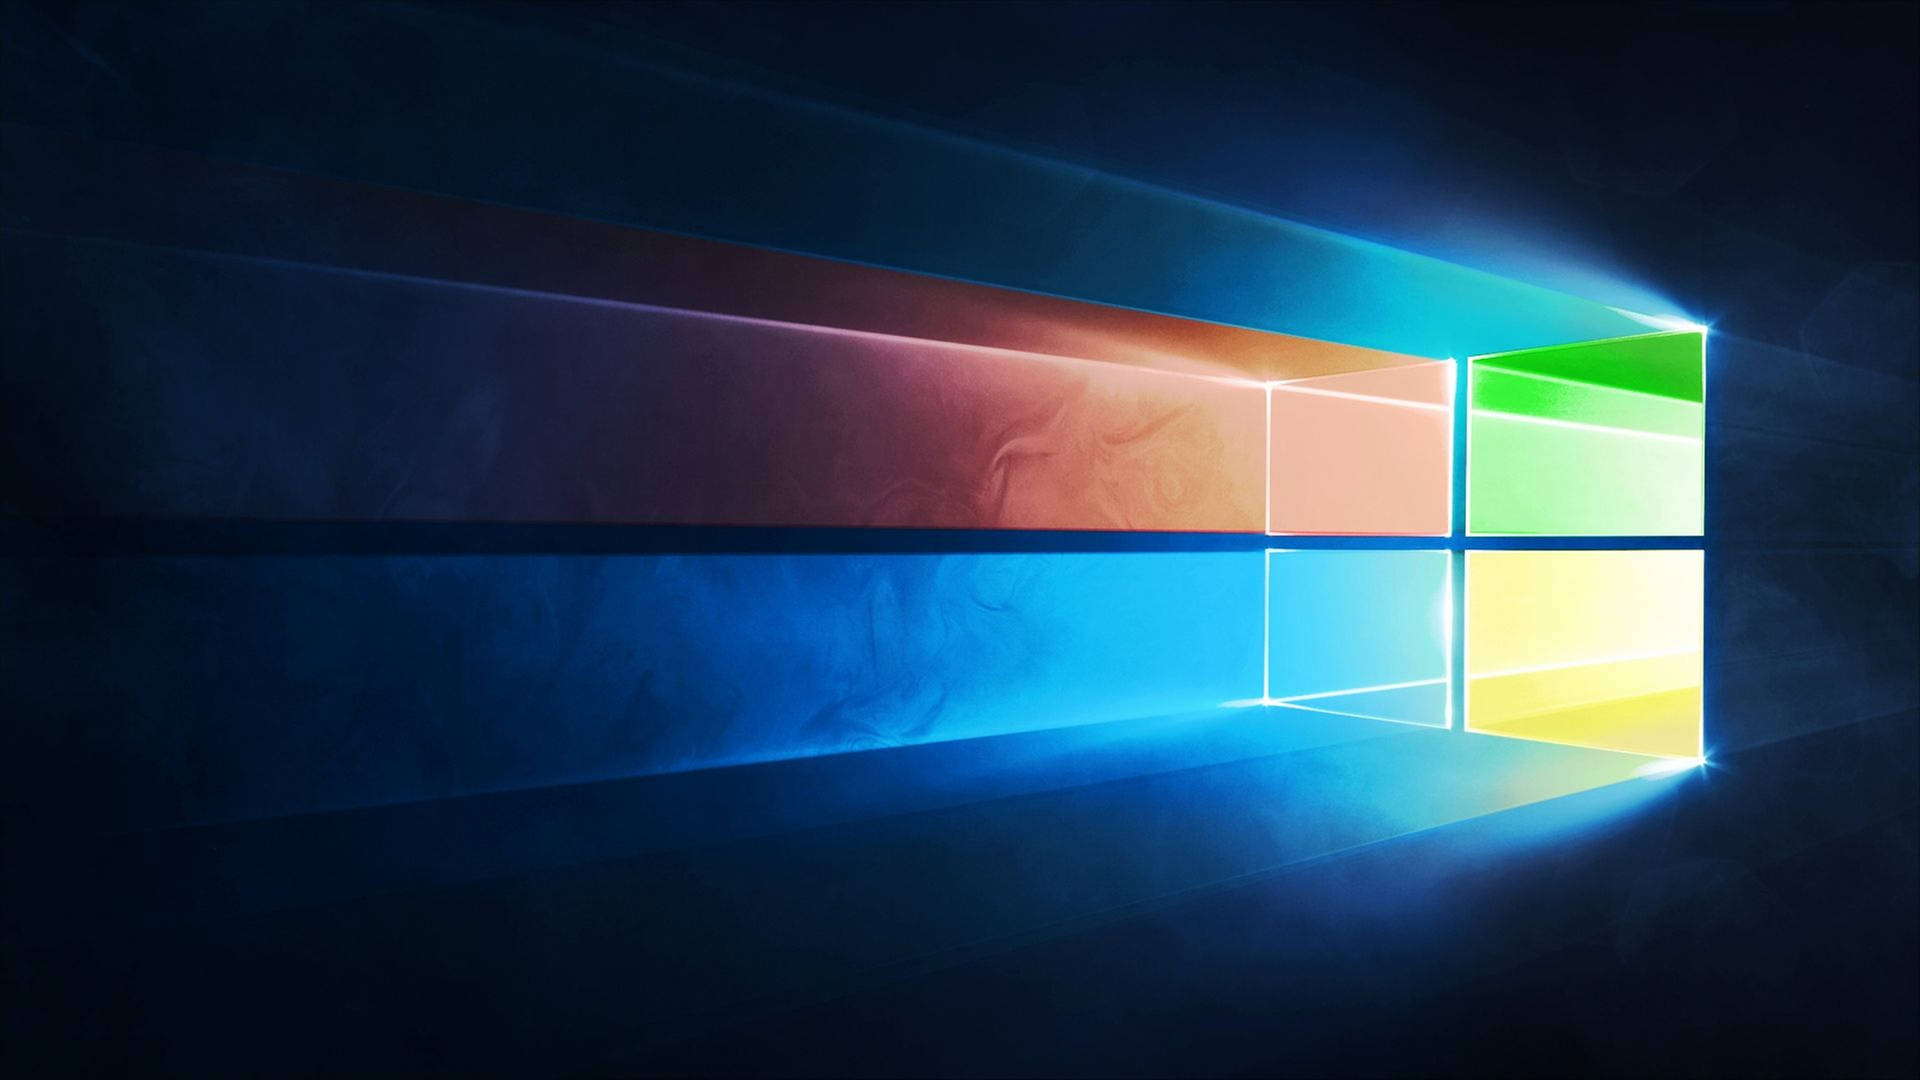 Vibrant Windows Logo On A Clean, Crisp 4k Background Background